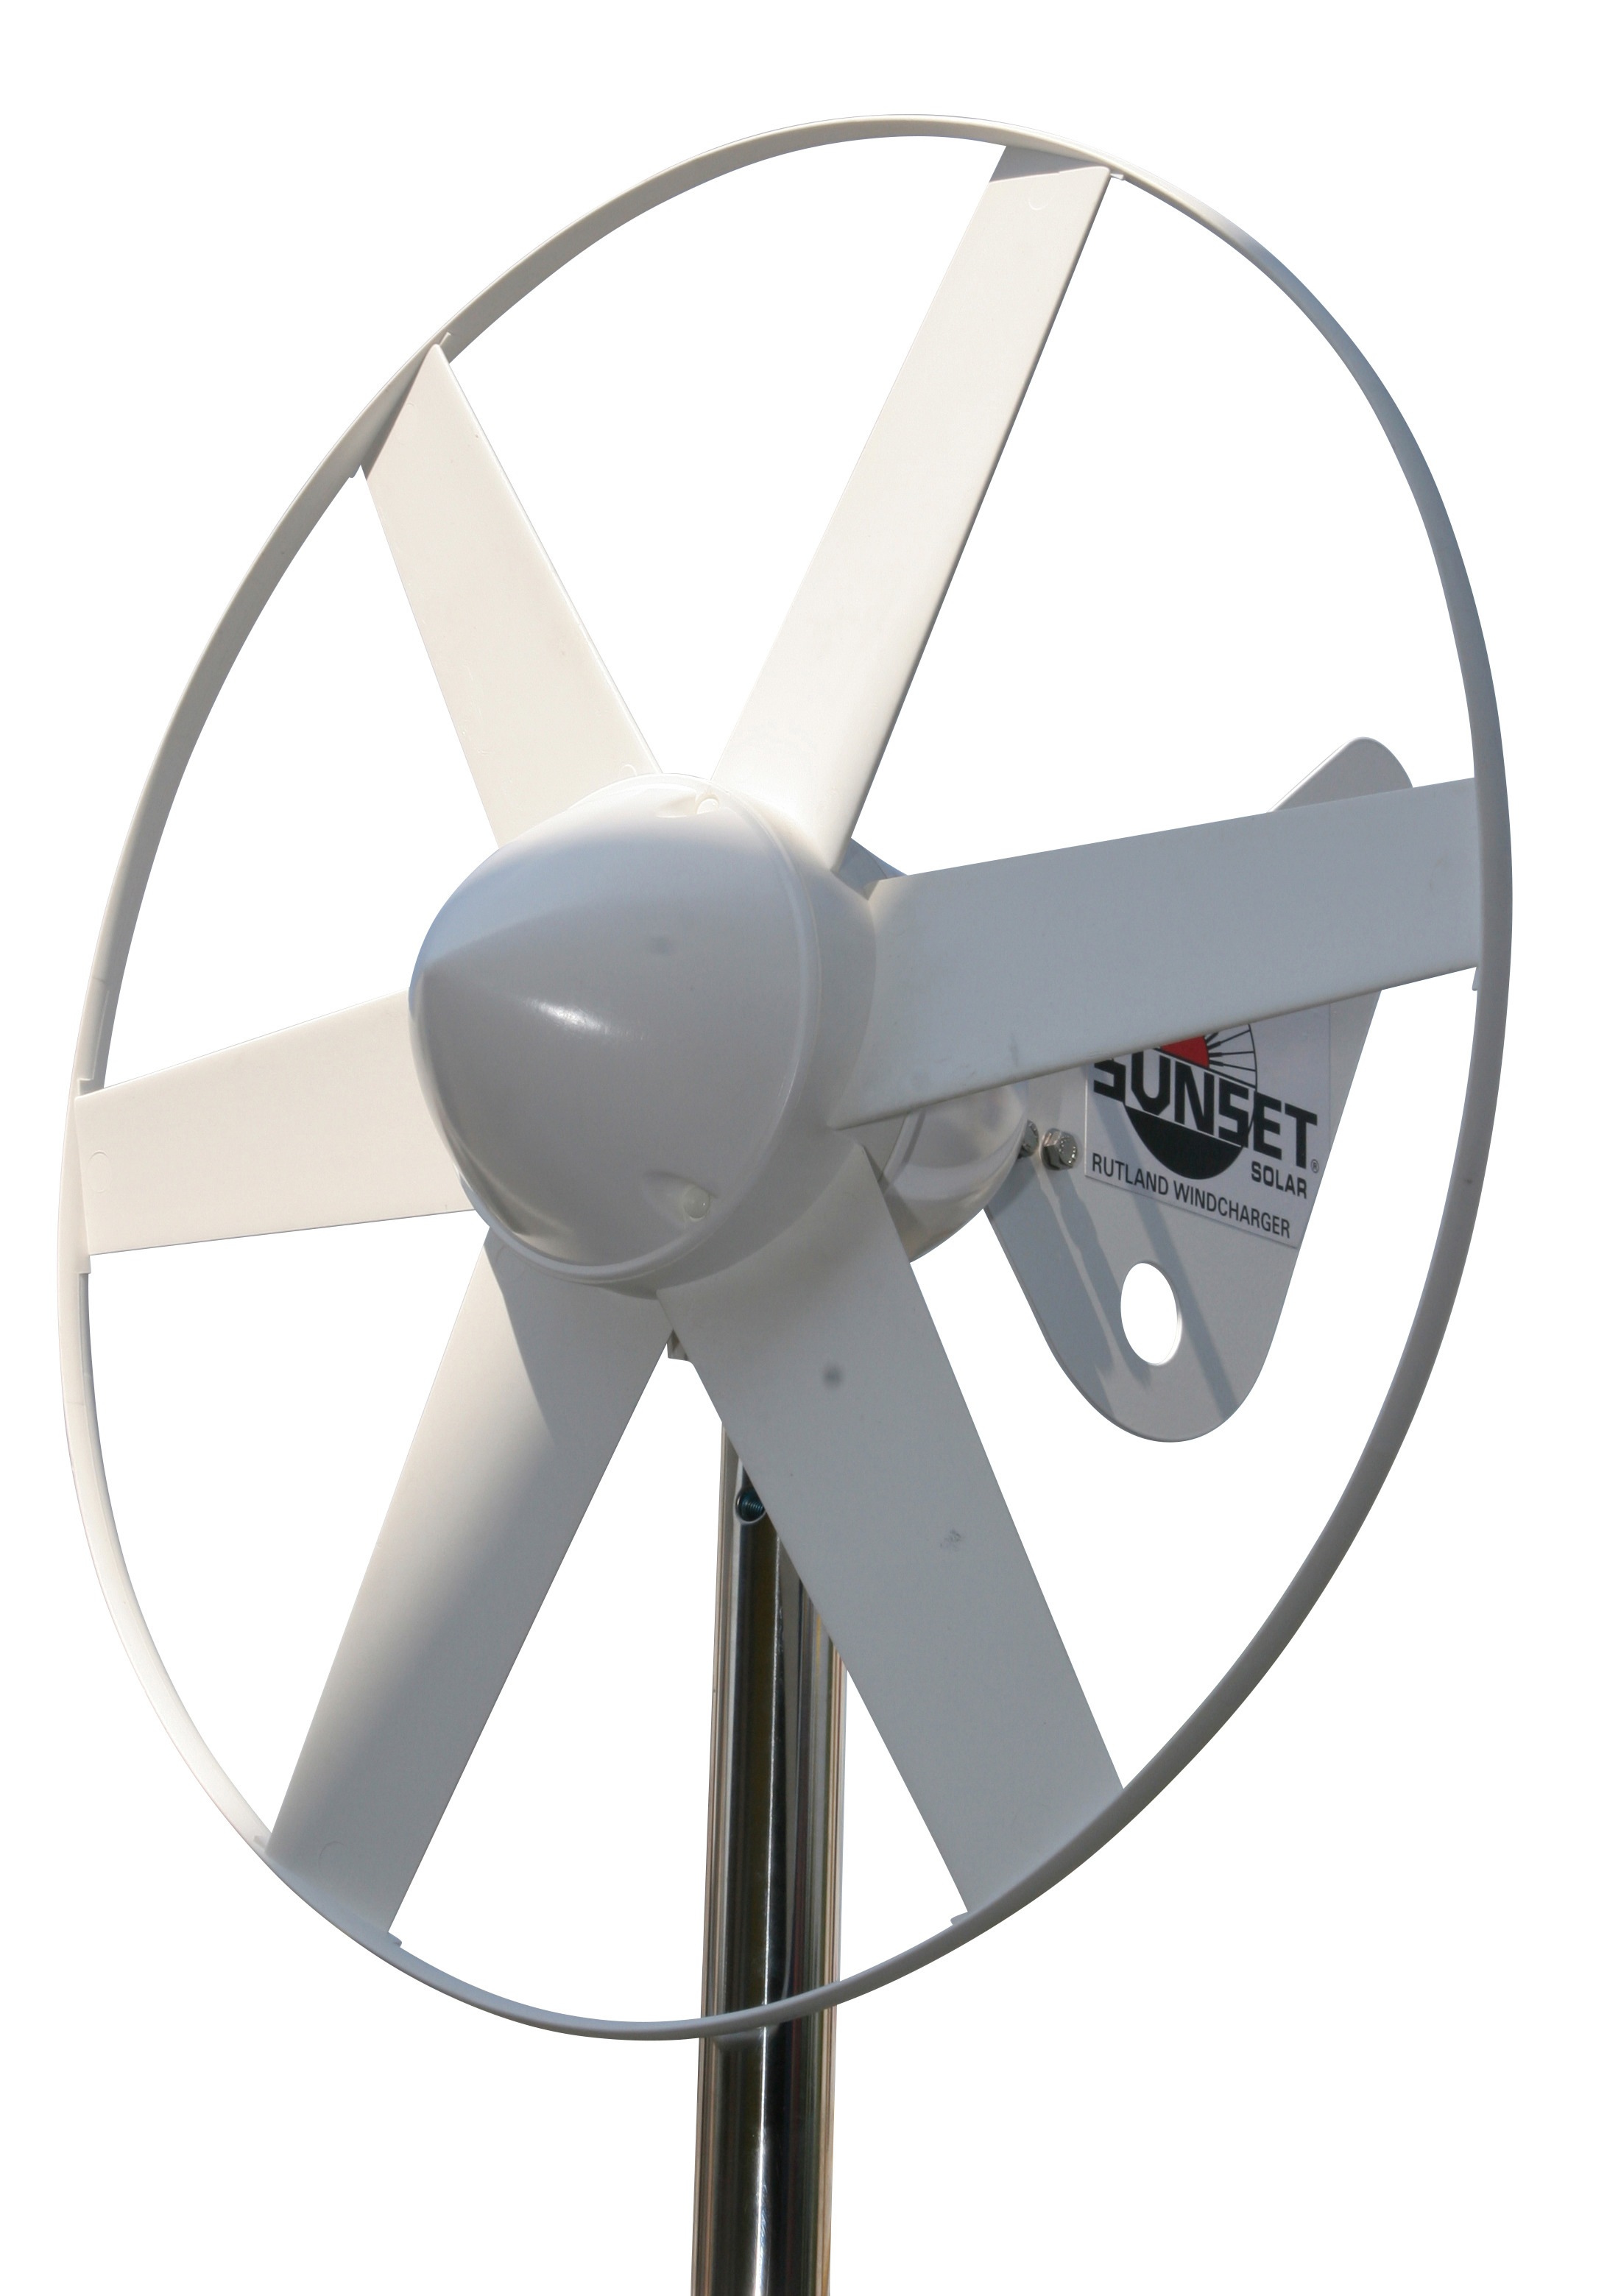 Sunset Windgenerator »WG 504, 12 V«, als Ergänzung zur Solarenergie